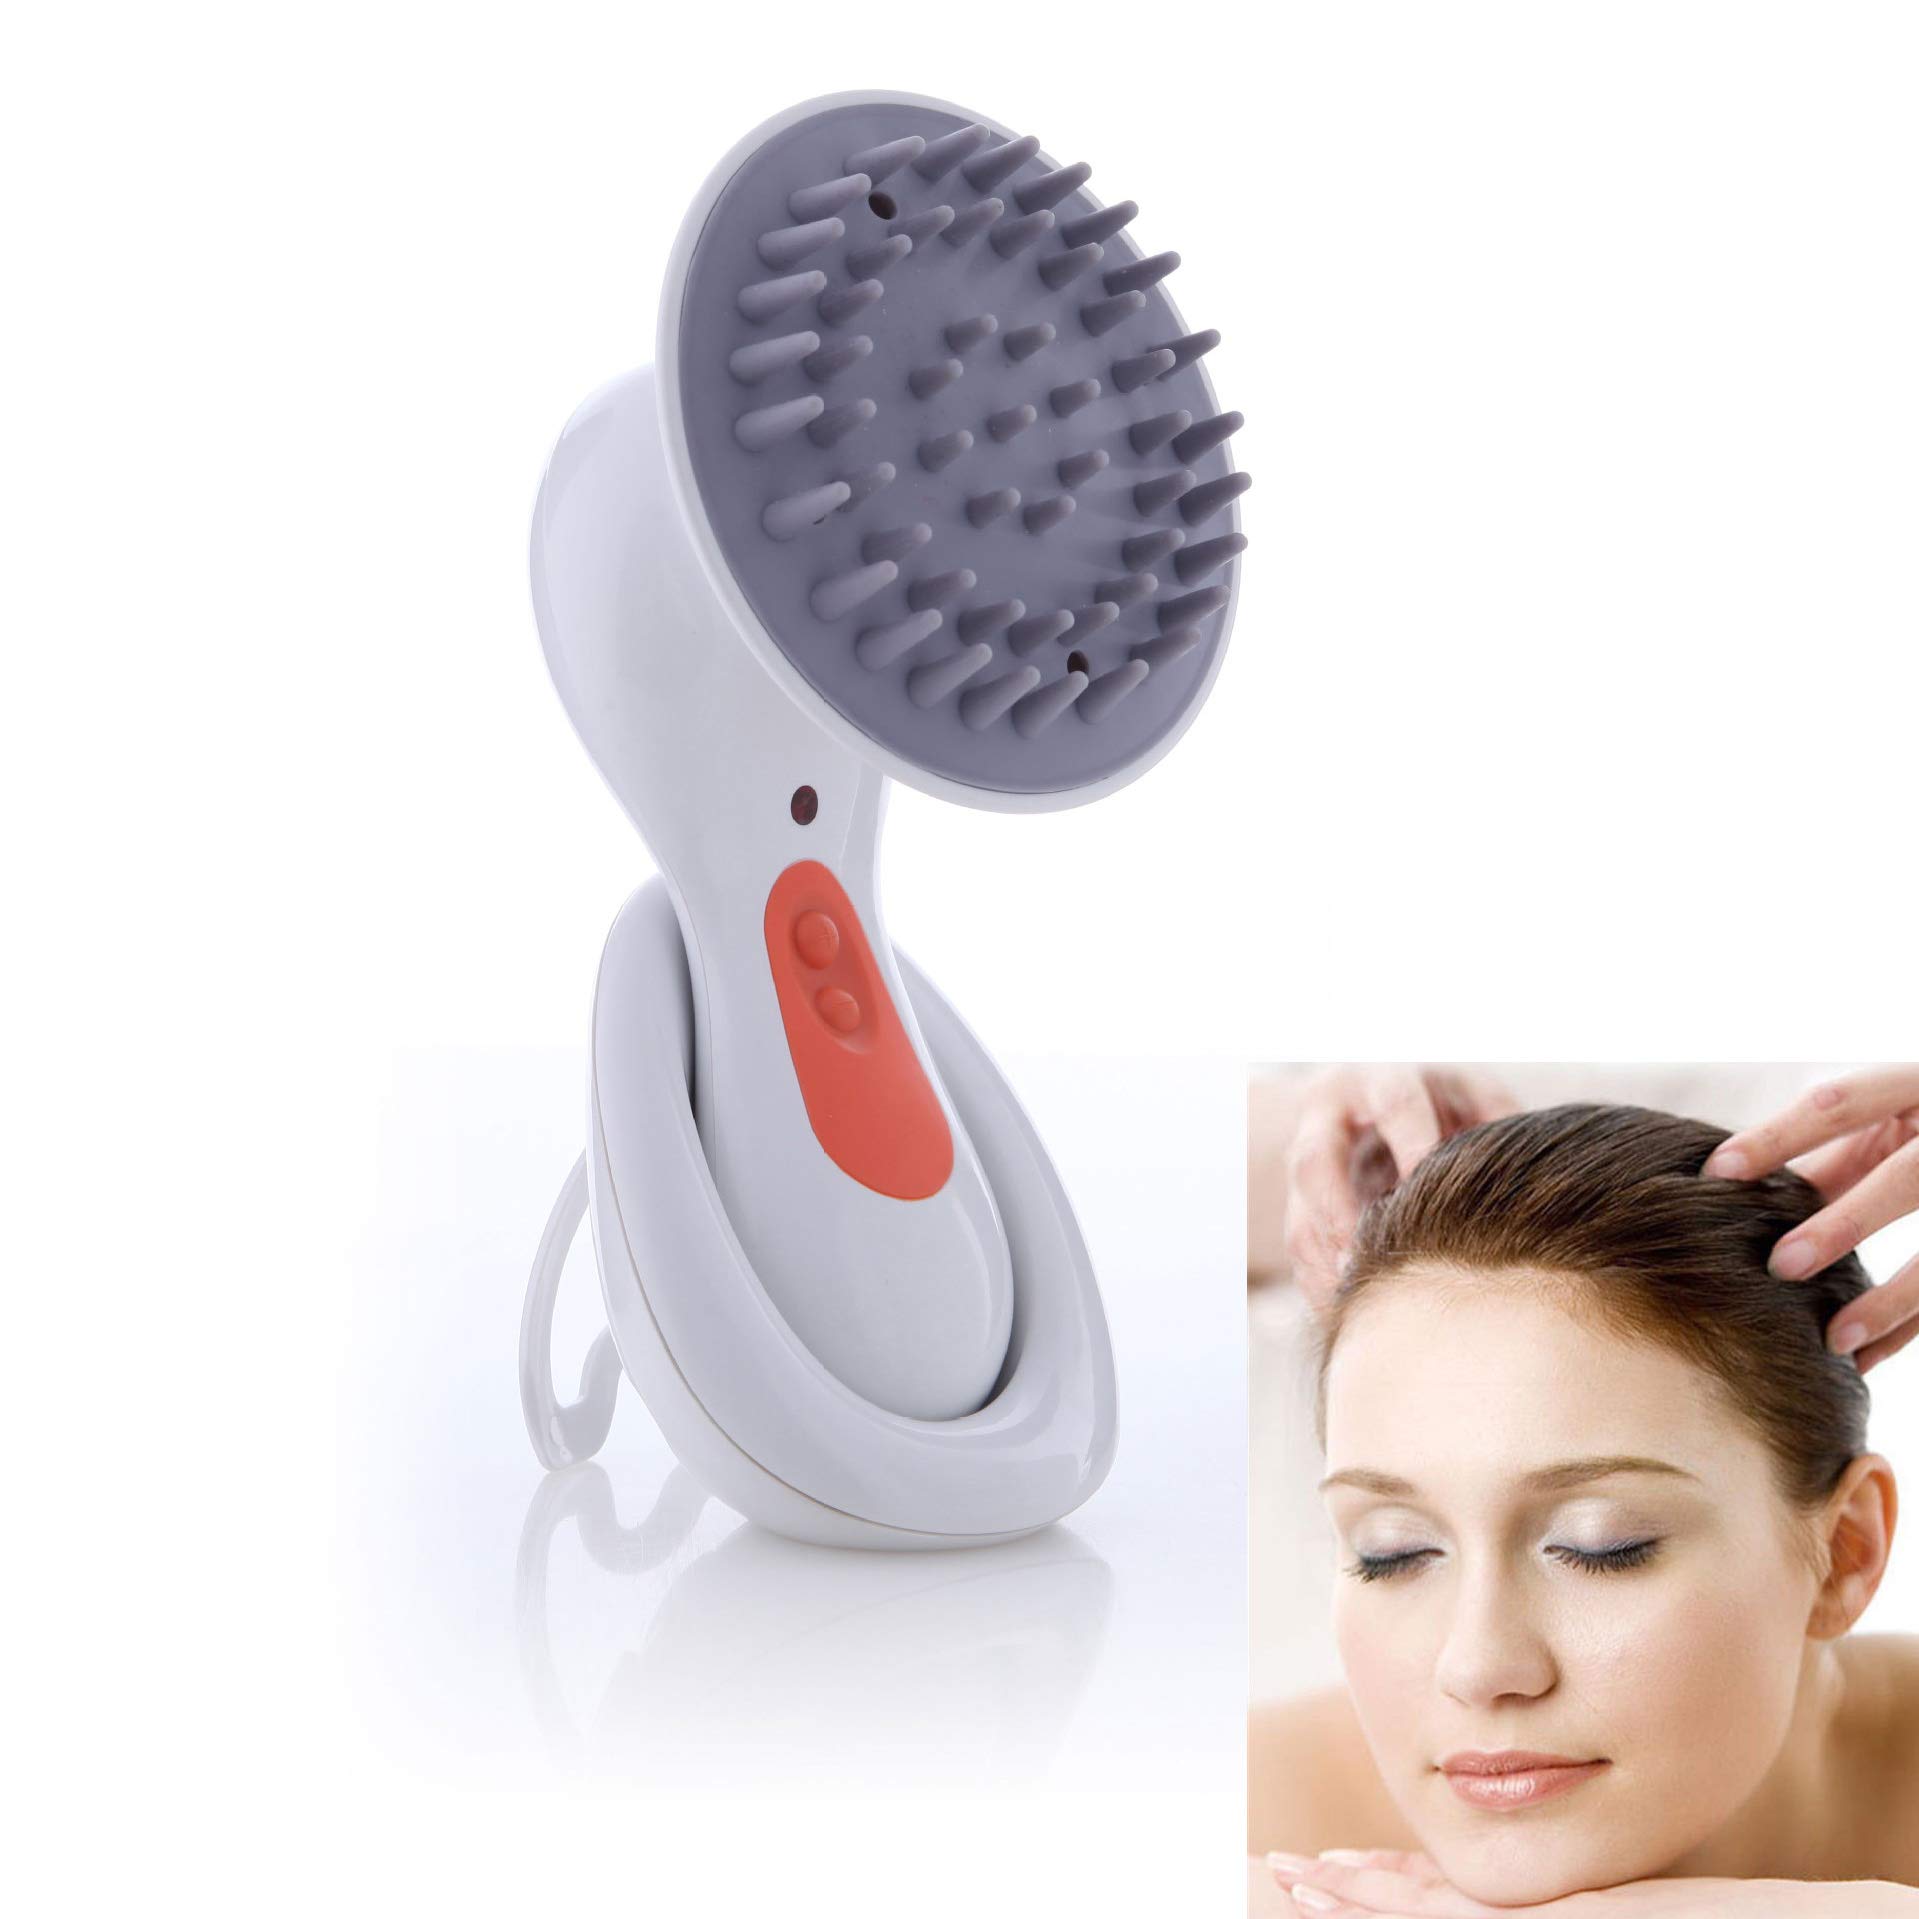 Head massage brushes